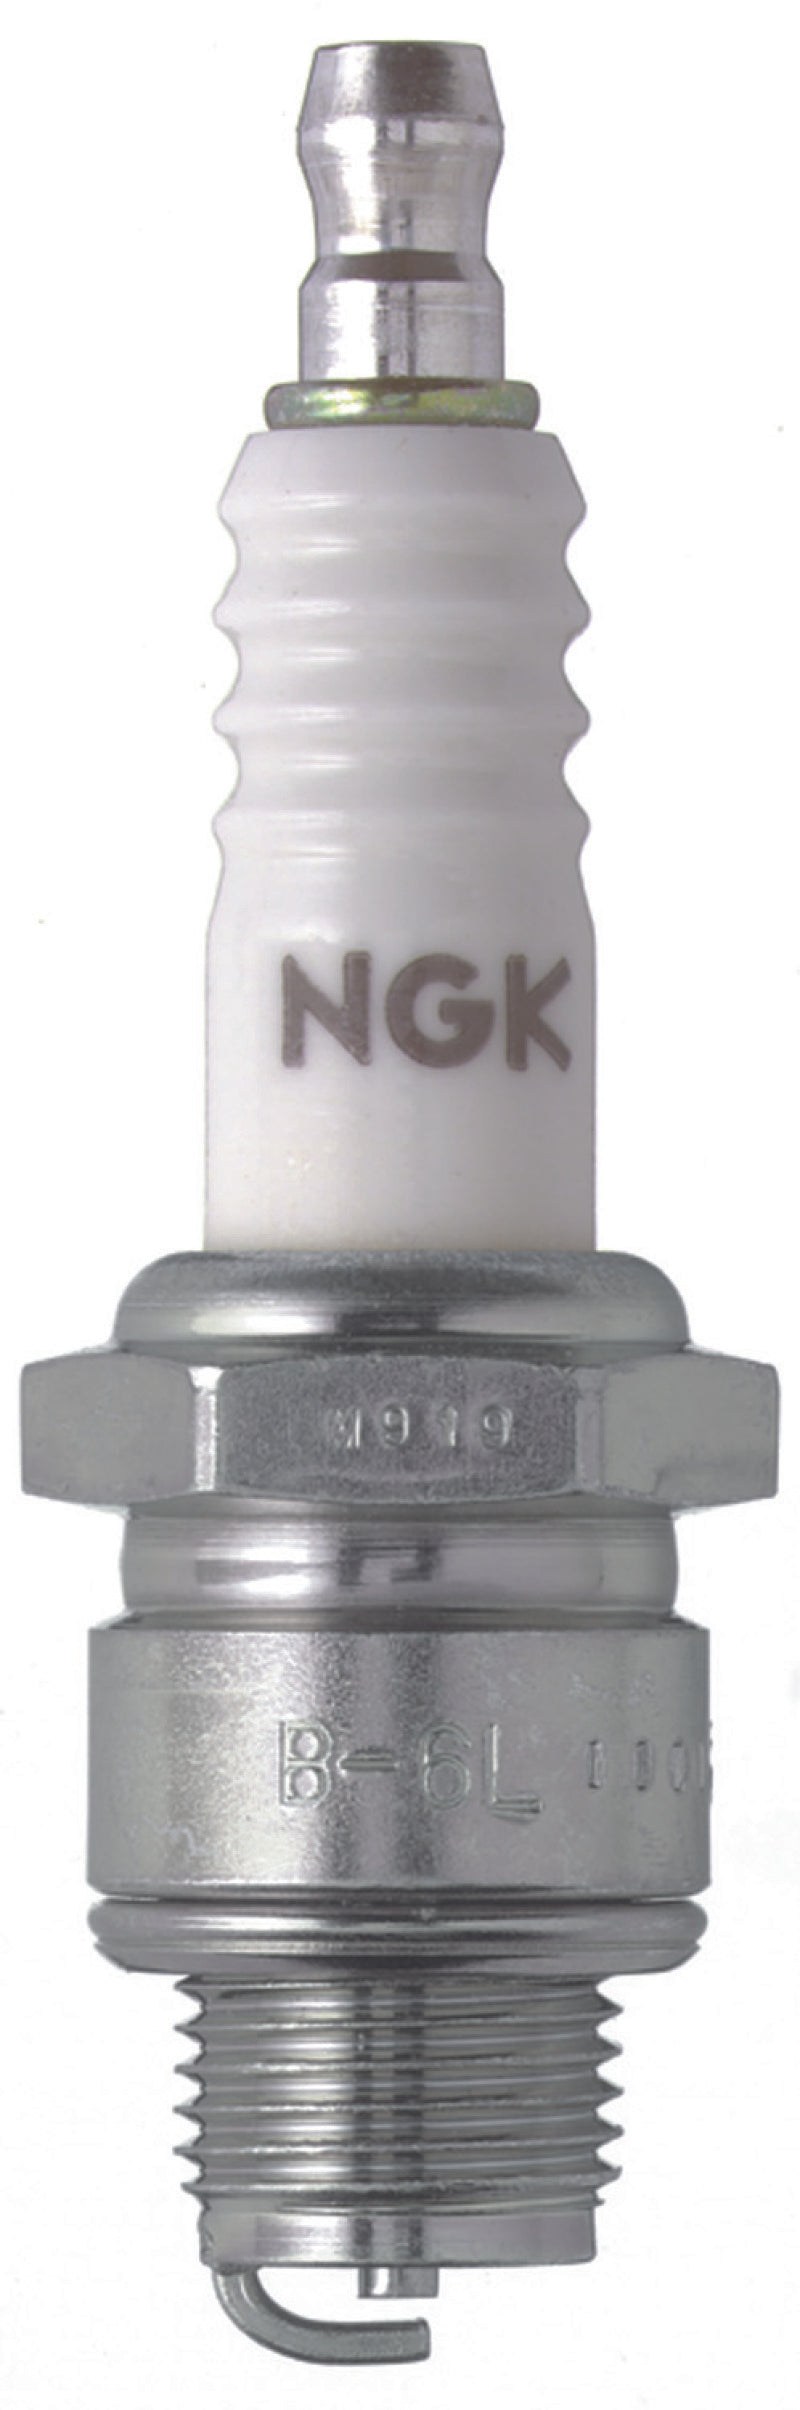 NGK Standard Spark Plug Box of 10 (B-6L) -  Shop now at Performance Car Parts